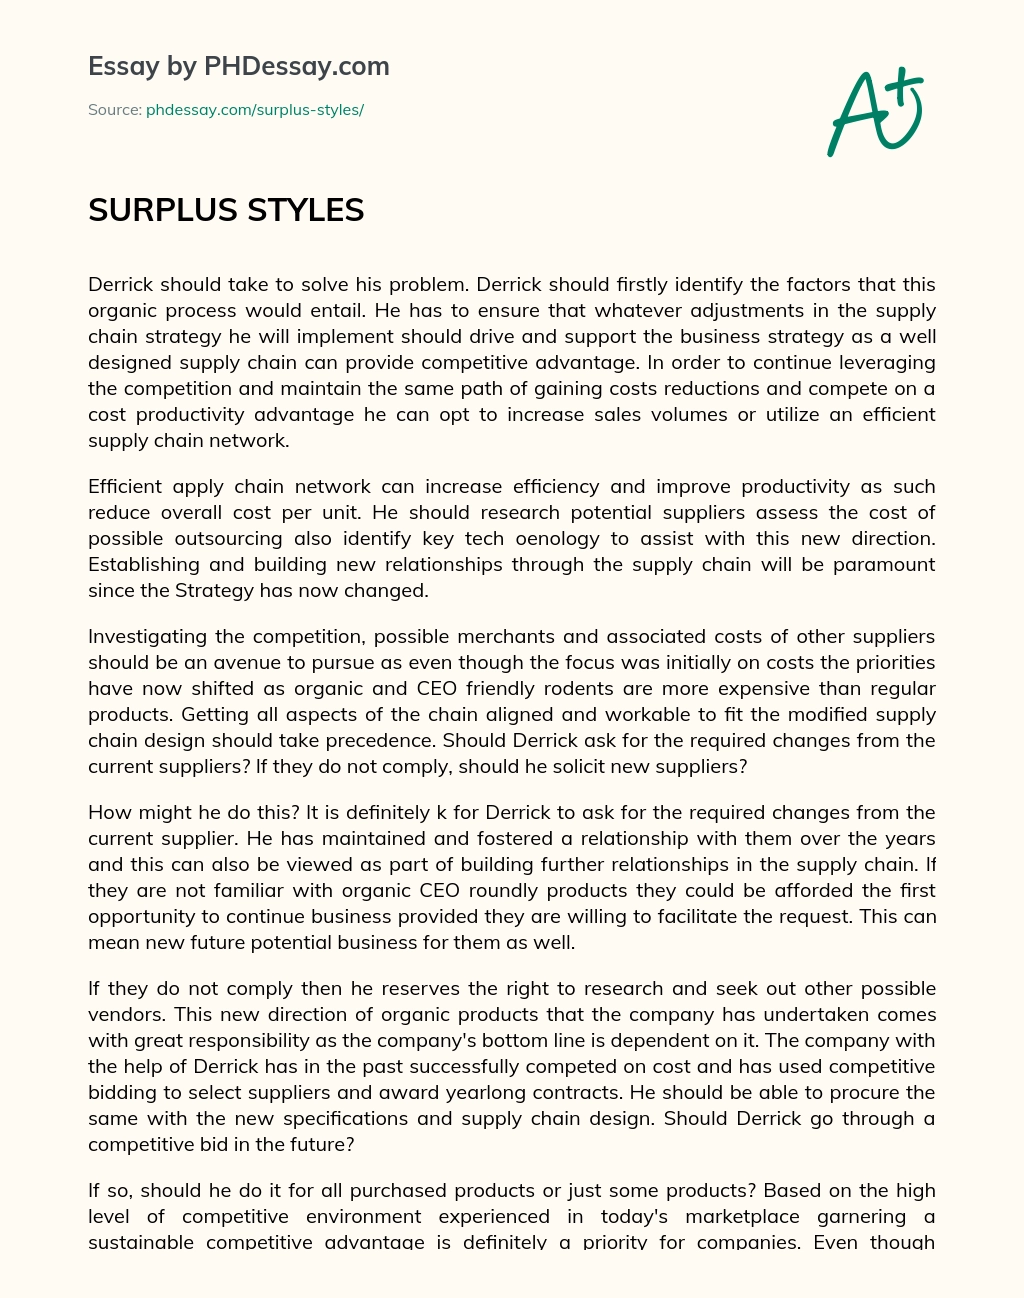 SURPLUS STYLES essay